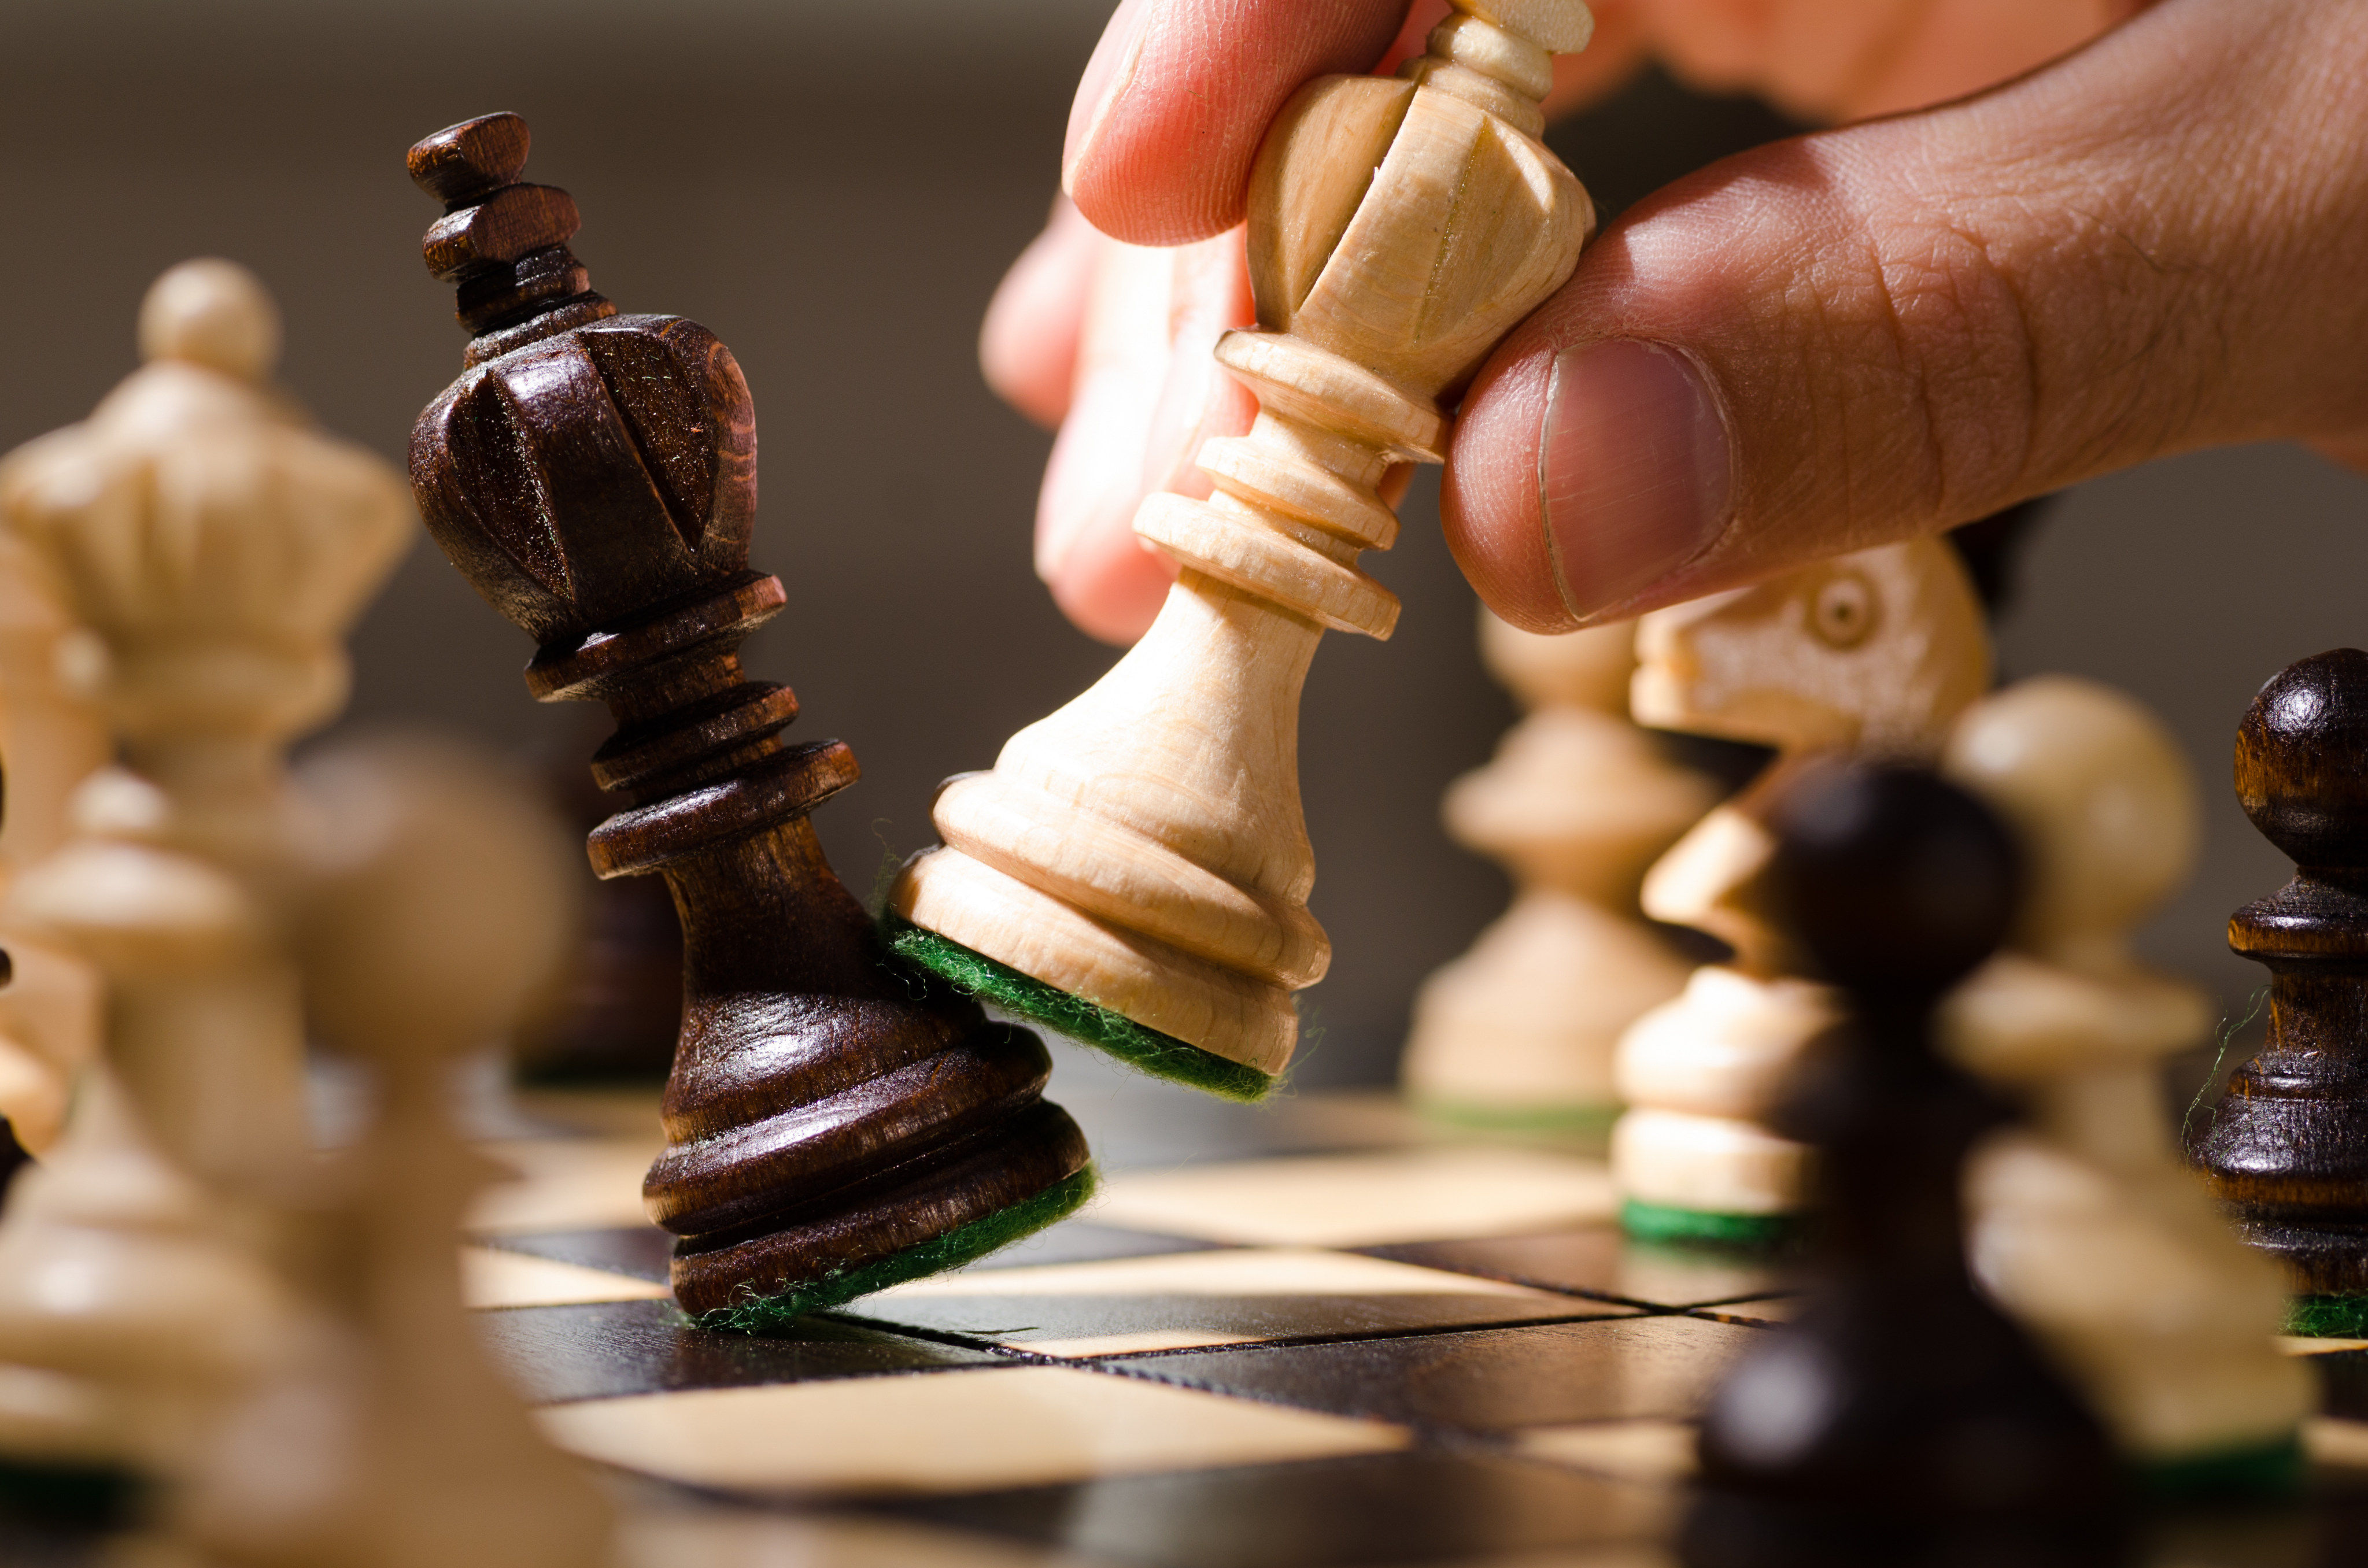 Chess: candidate matches reach their nail biting zenith